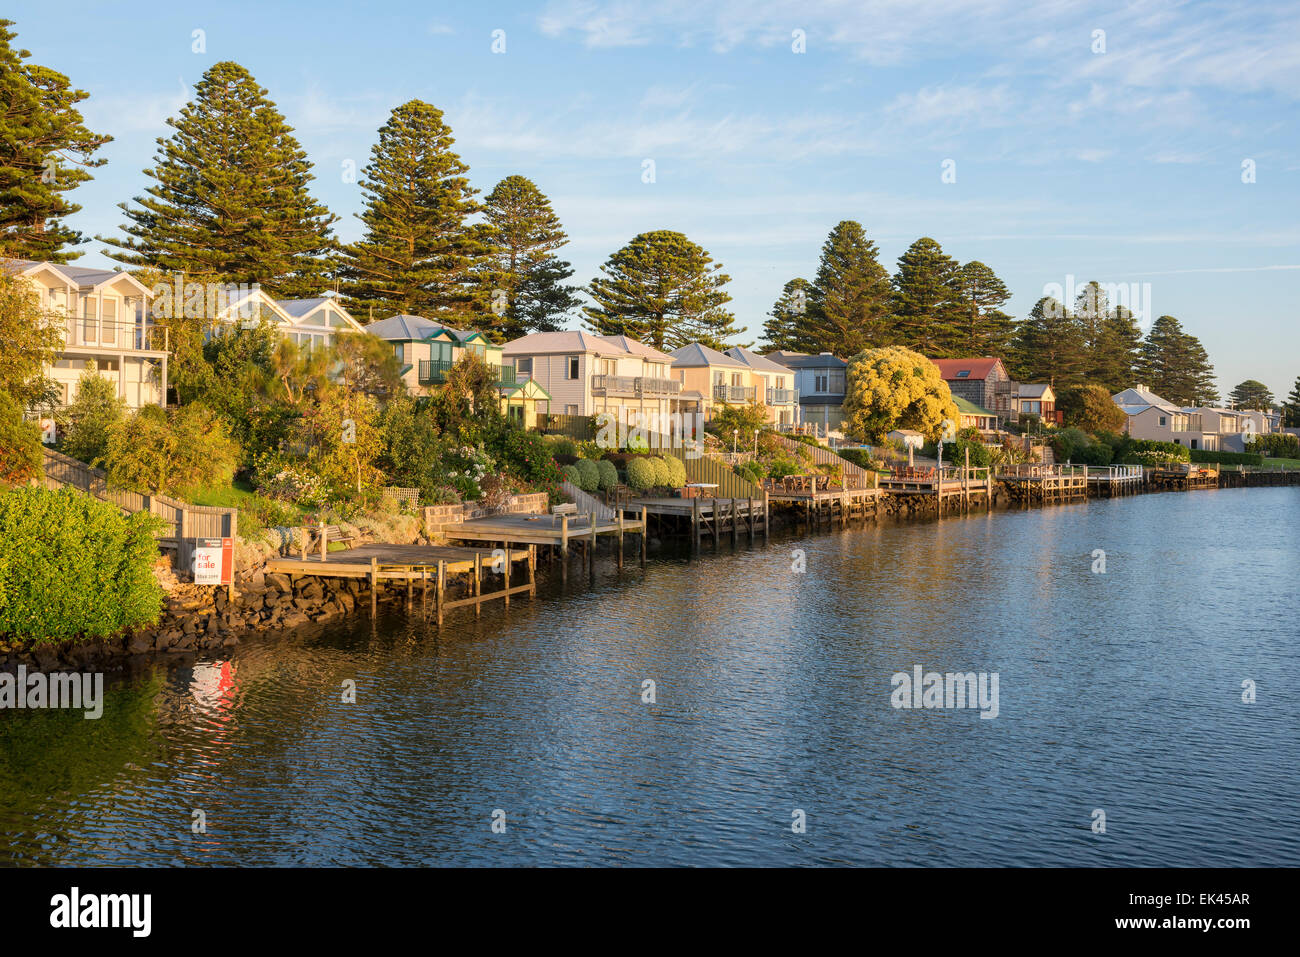 Das Dorf Port Fairy am Fluss Moyne, Victoria Australien Stockfoto